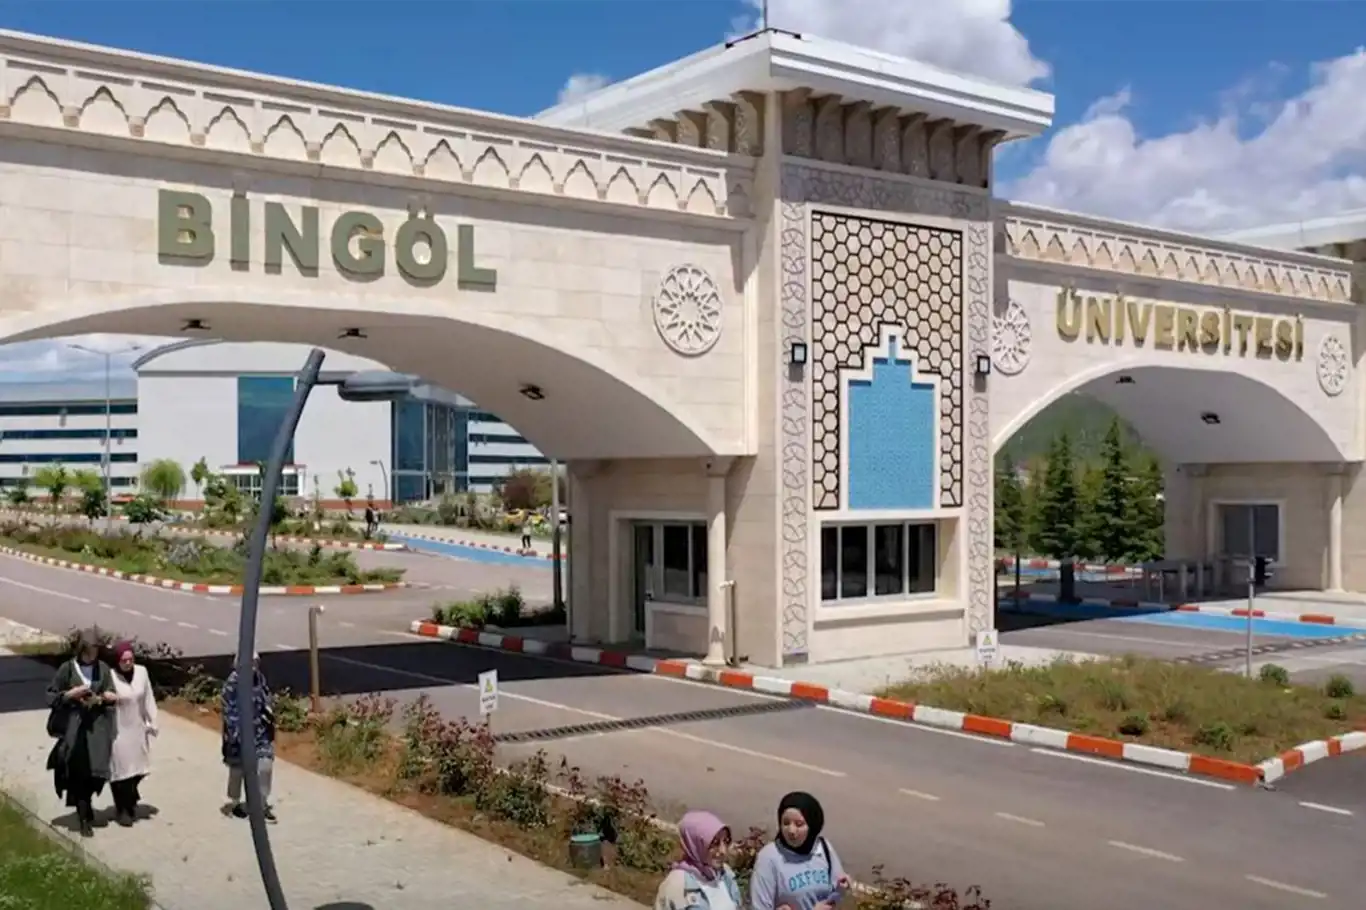 bingol universitesi find and study 3 - Bingöl Üniversitesi